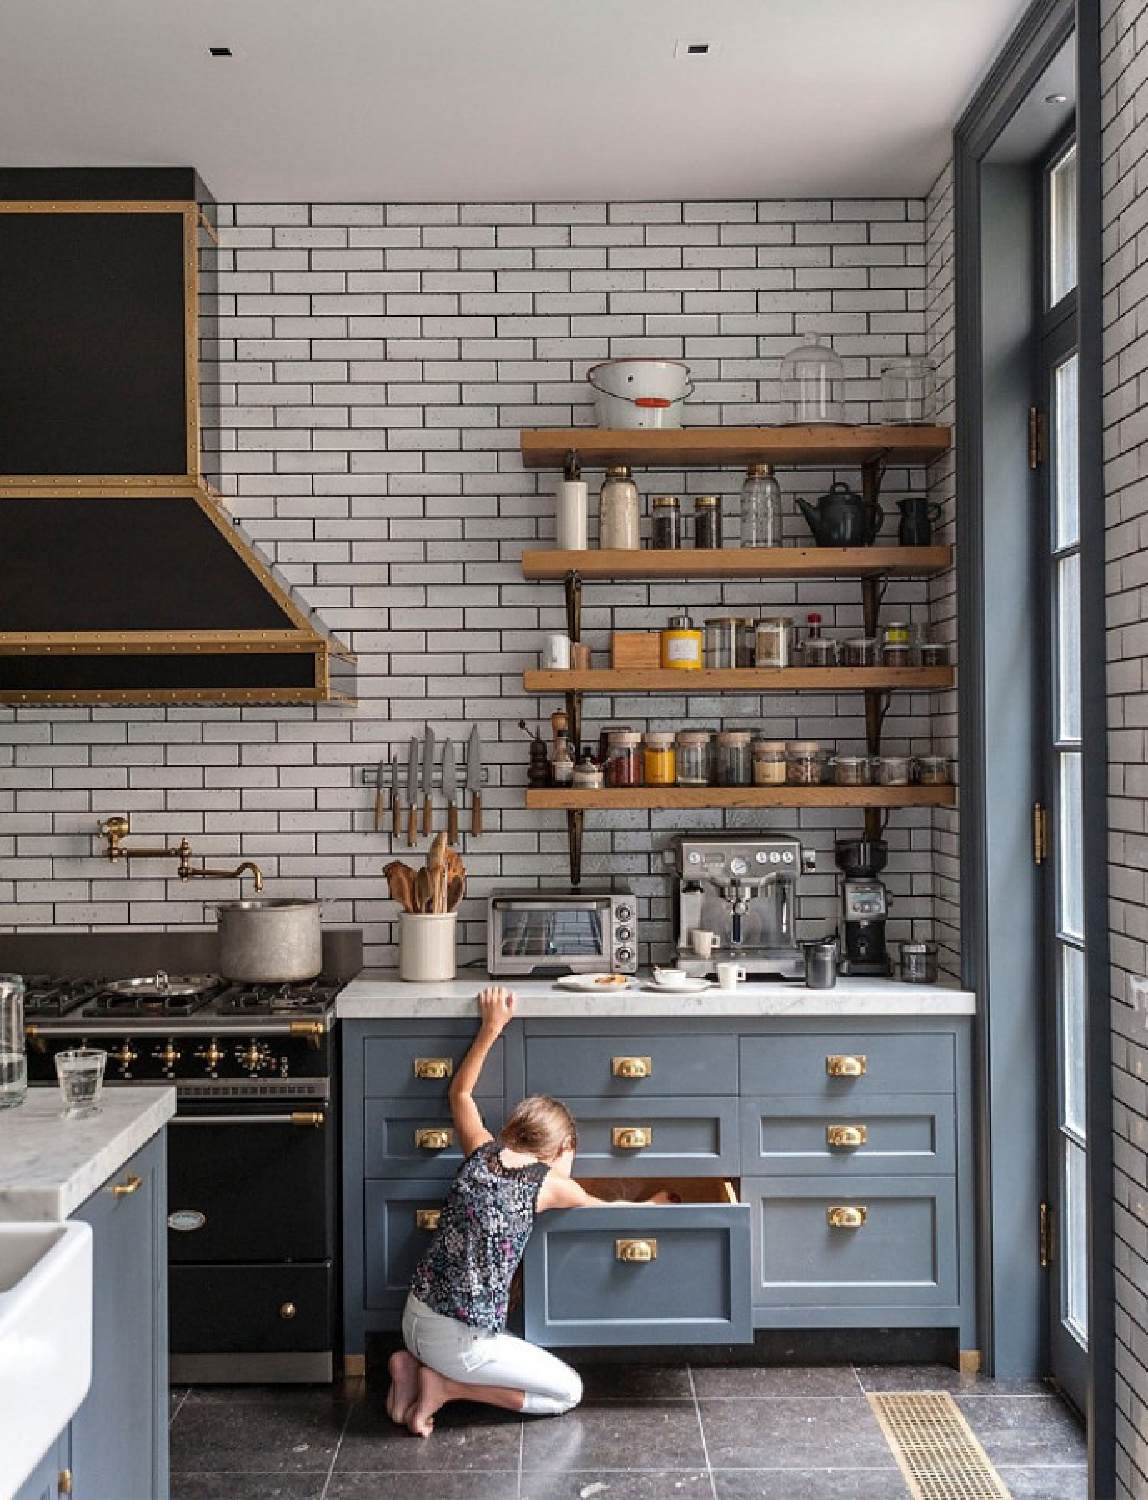 Amazing Black and White Kitchen Decor Ideas